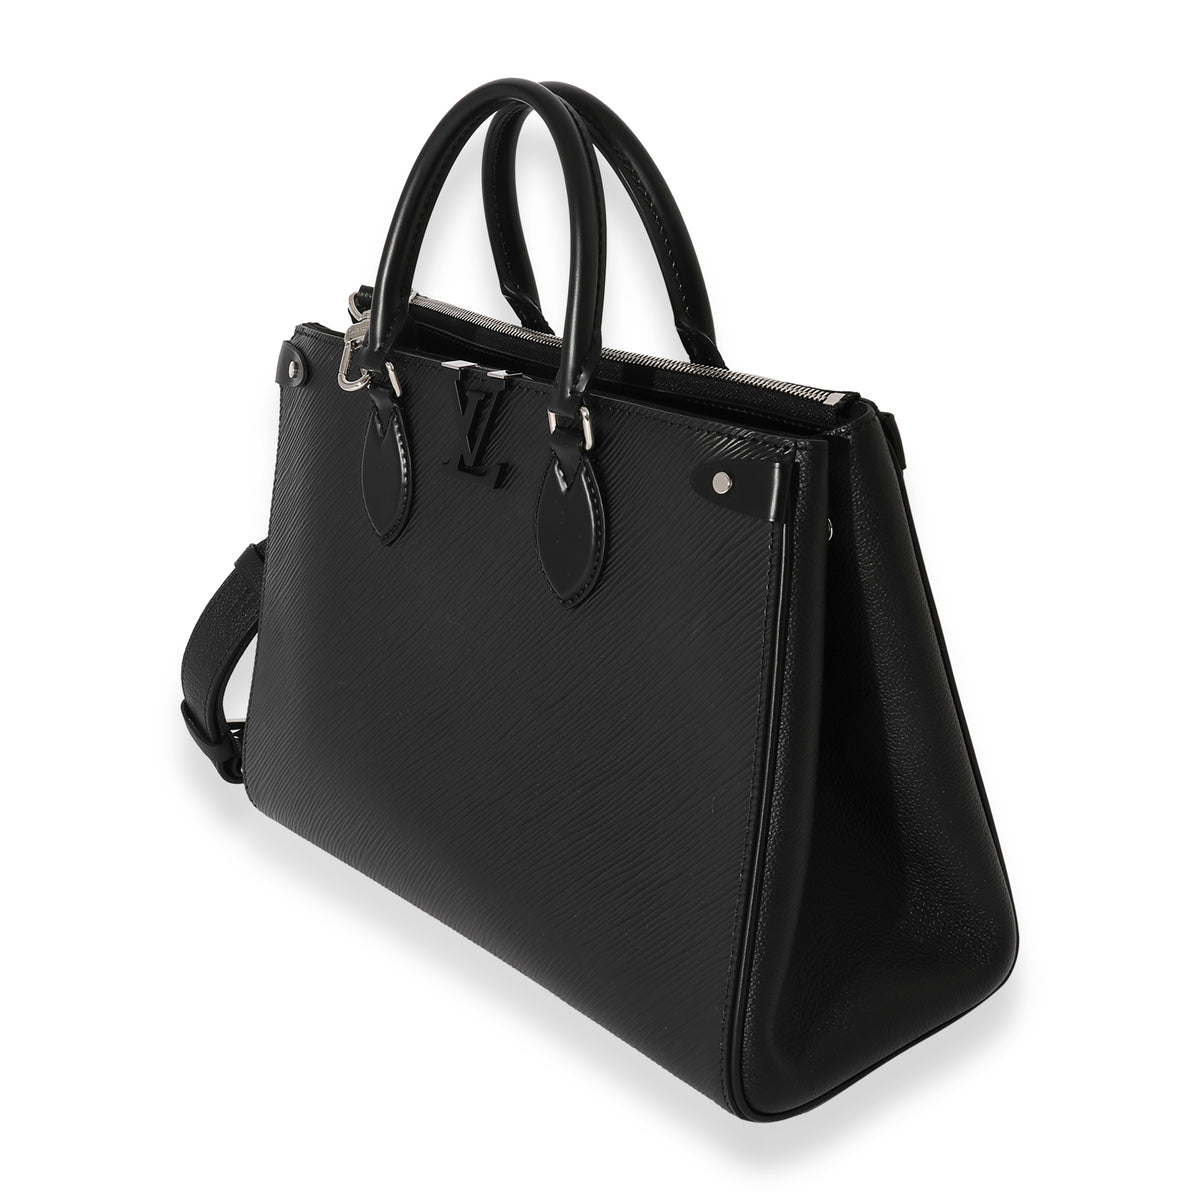 Louis Vuitton Black Epi Leather Grenelle Flap Shoulder Bag